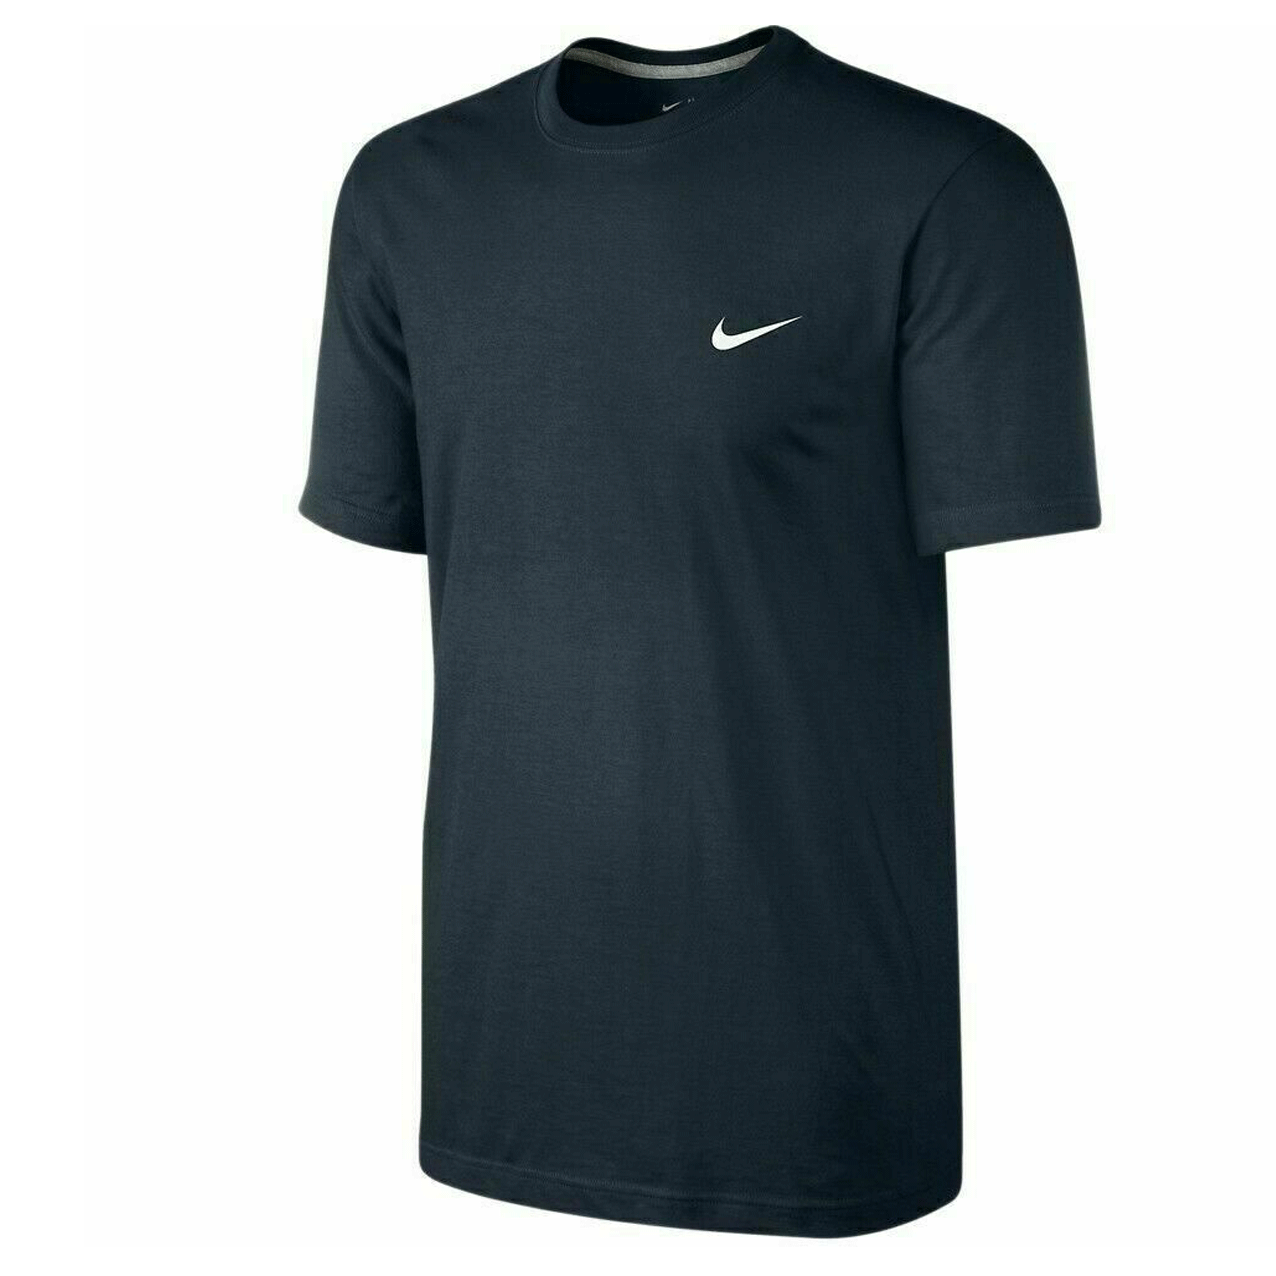 Nike Mens T Shirt Embroidered Logo Short Sleeve Cotton TShirt 707350-013 freeshipping - Benson66